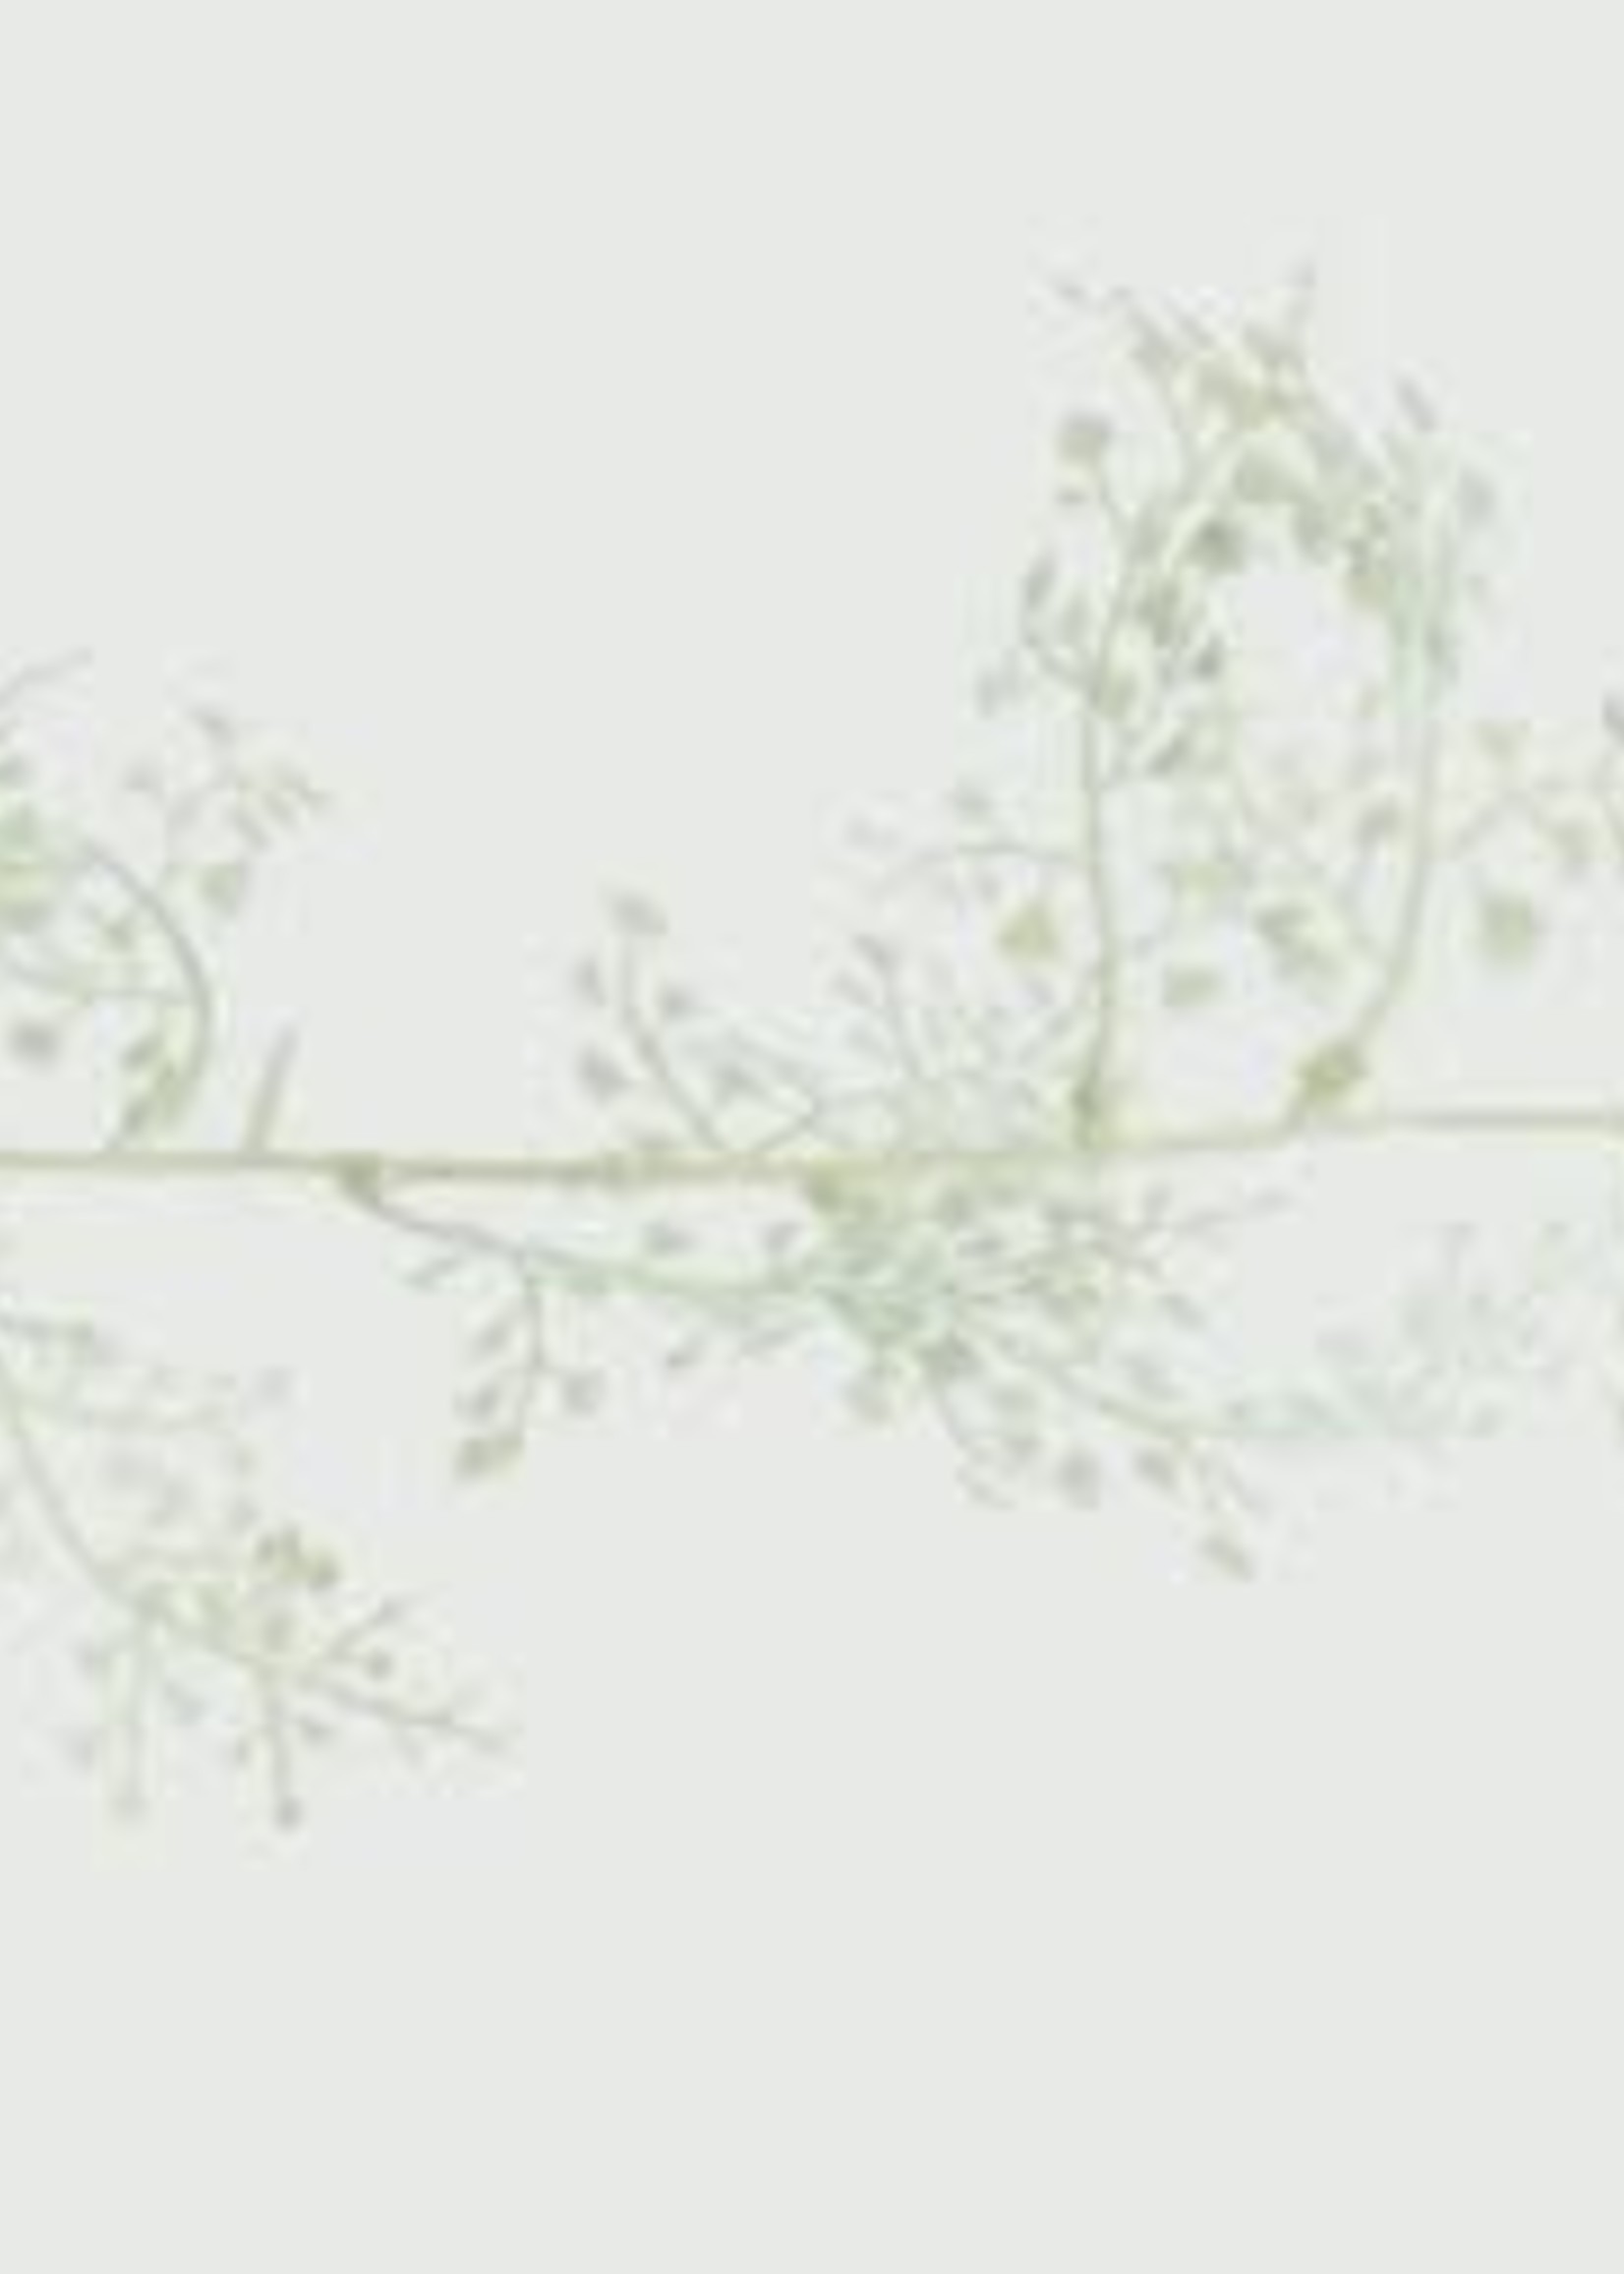 Premier Glitter Fern Leaf Garland White 1.8m